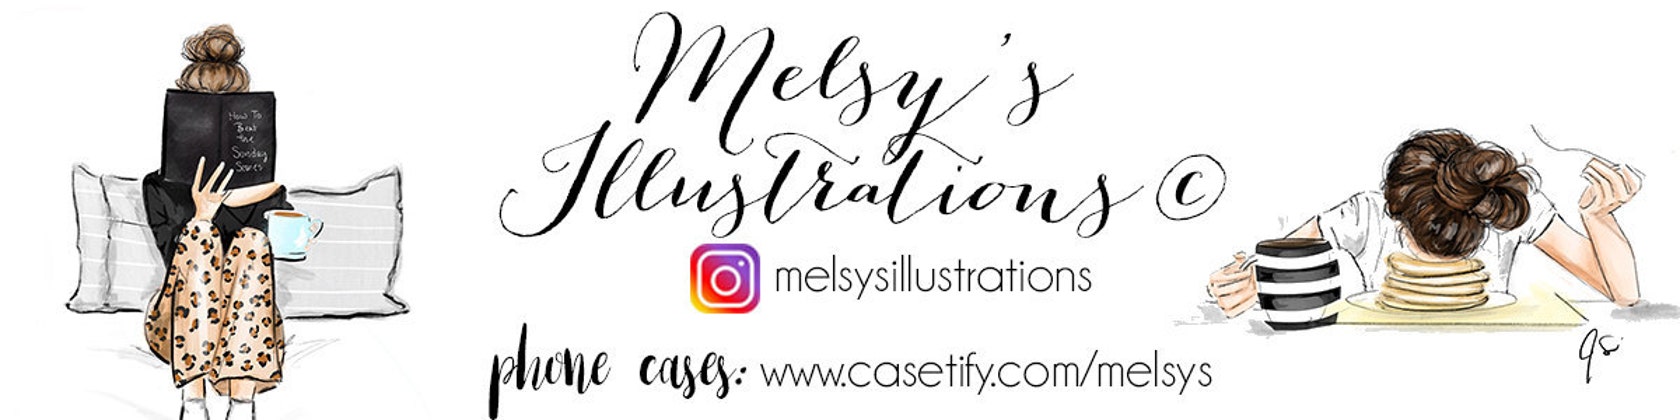 Melsys Illustrations © By Melsys On Etsy 